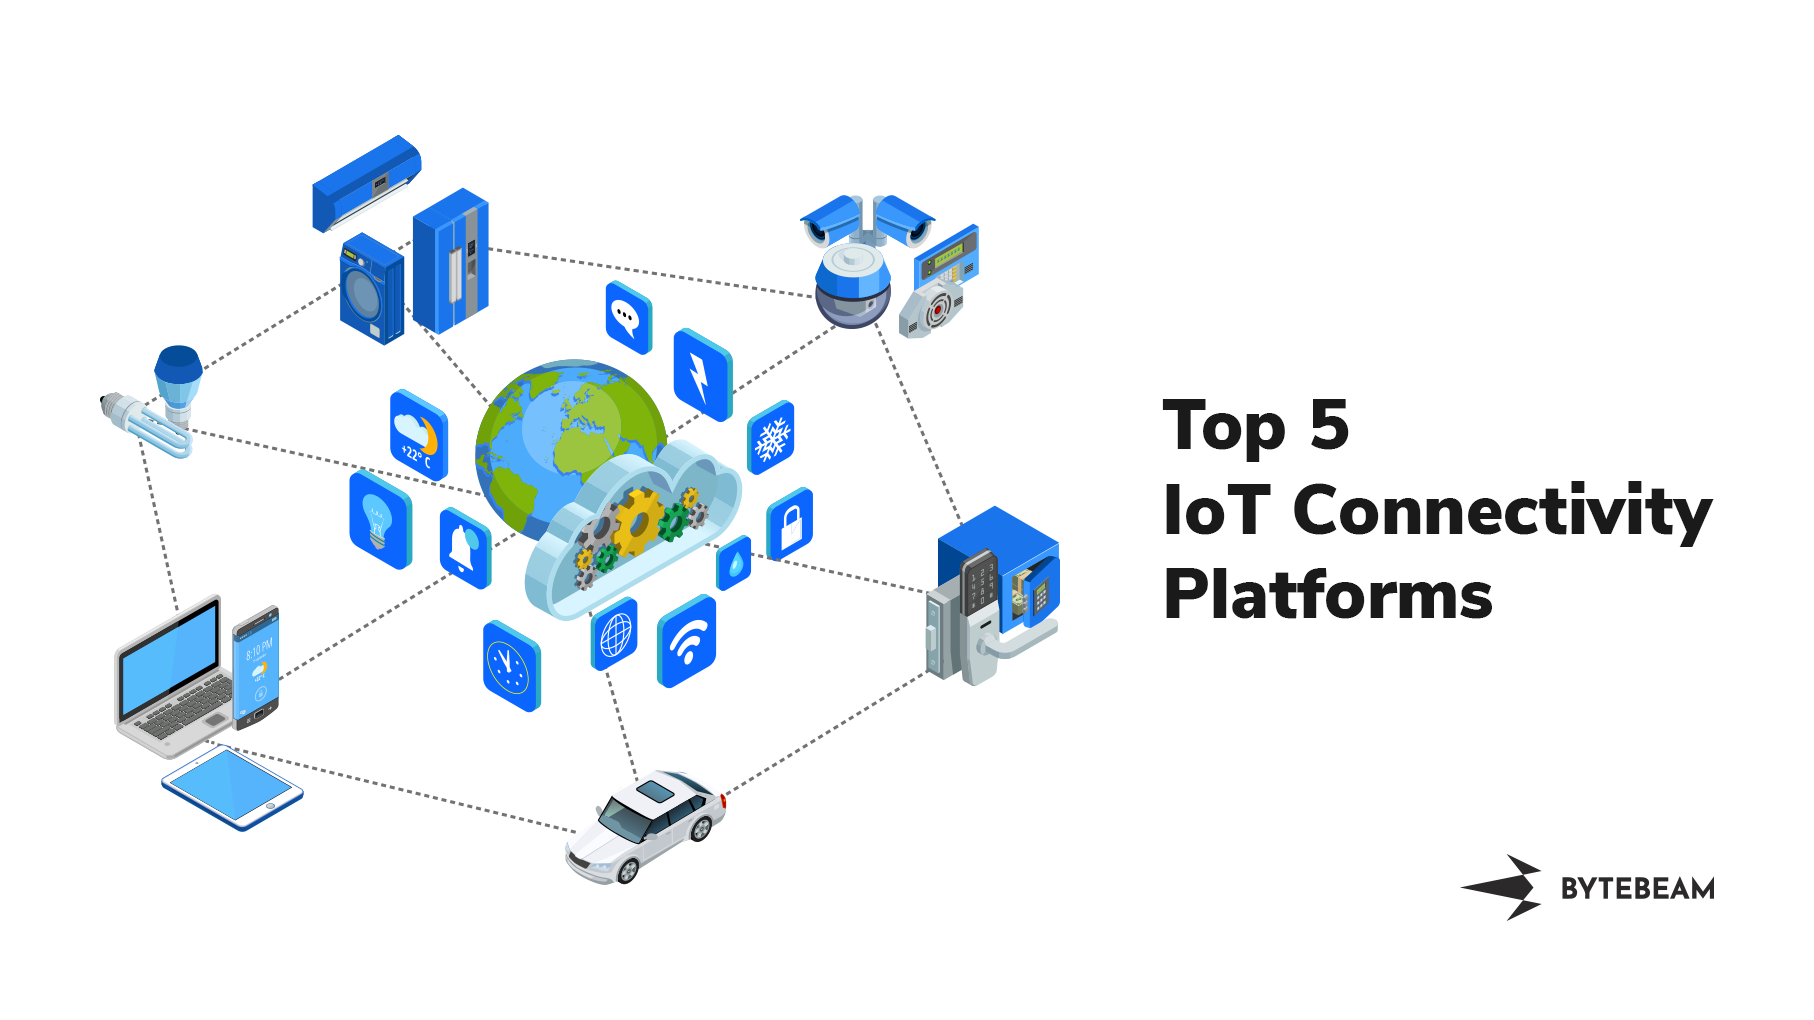 IoT Connectivity Platforms